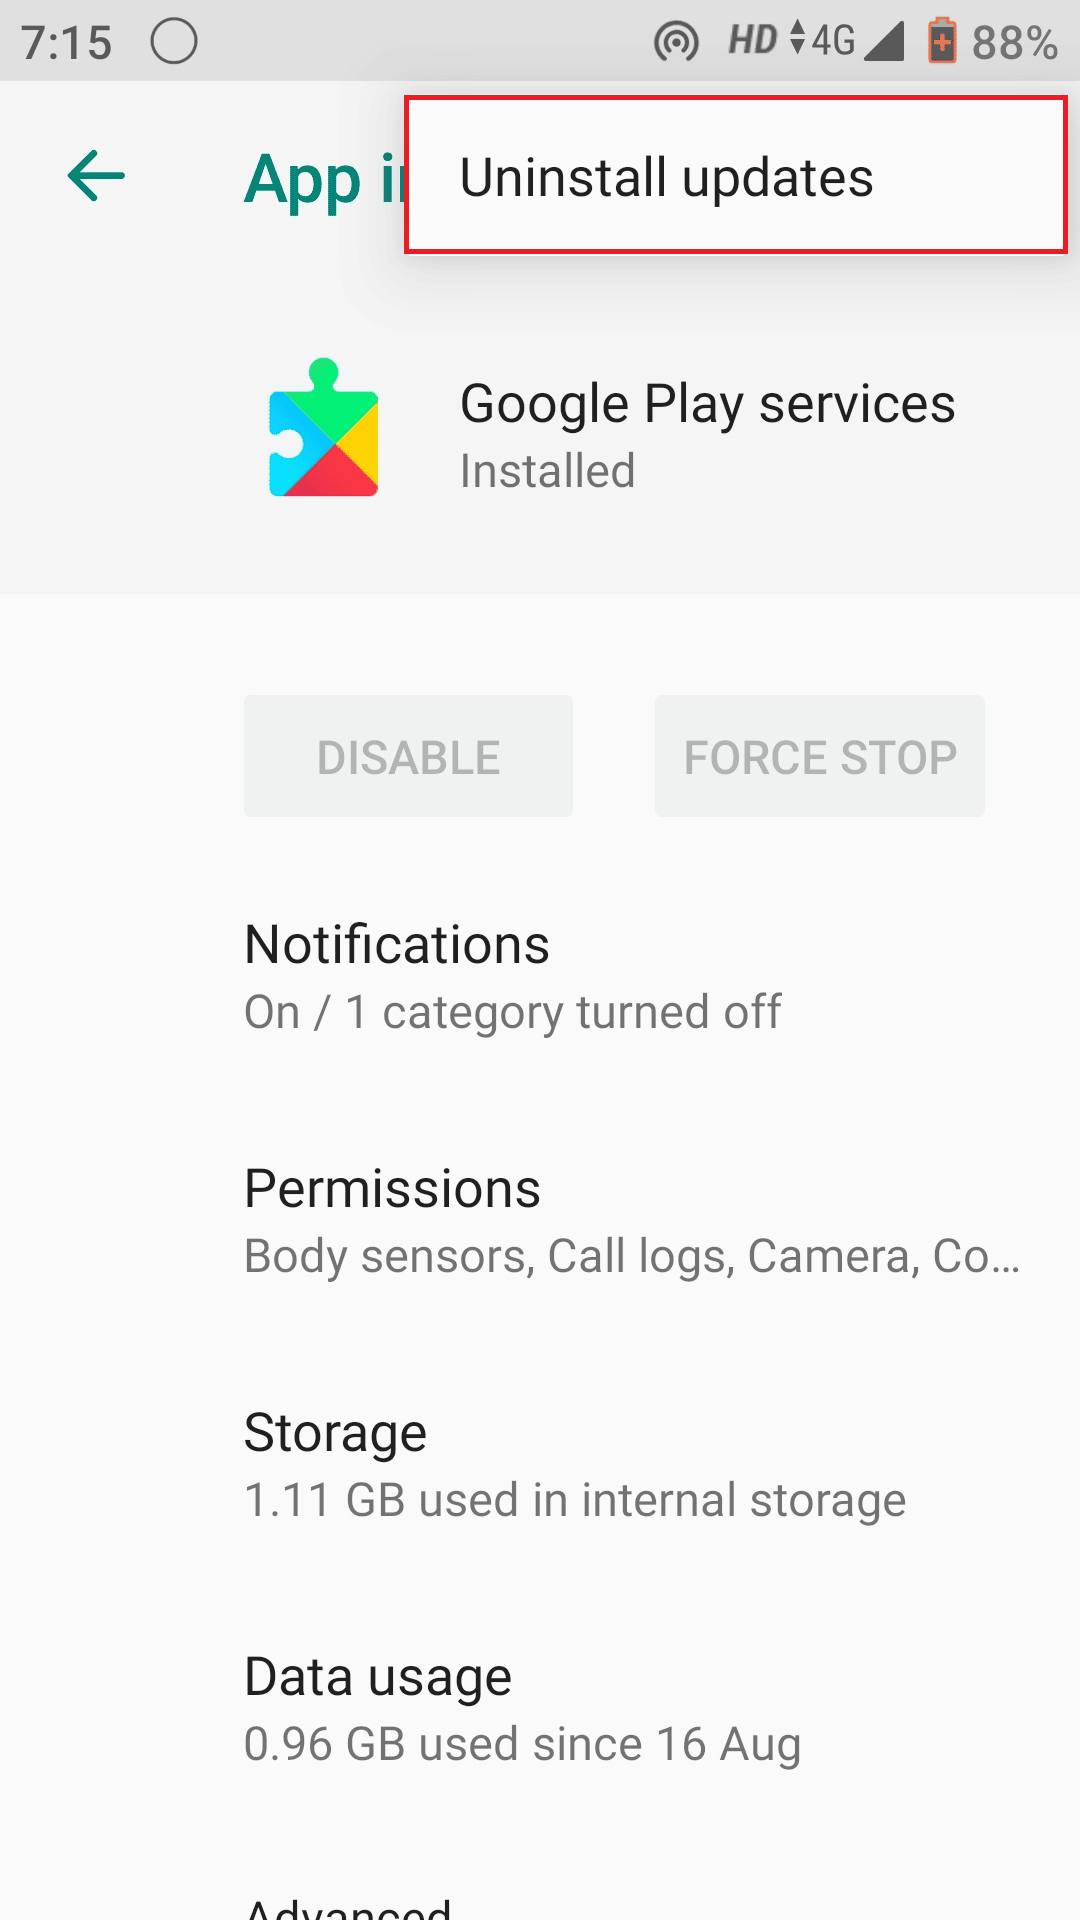 Uninstall updates ကို နှိပ်ပါ။ Uninstall မလုပ်ဘဲ Android App ကို အဆင့်နှိမ့်နည်း